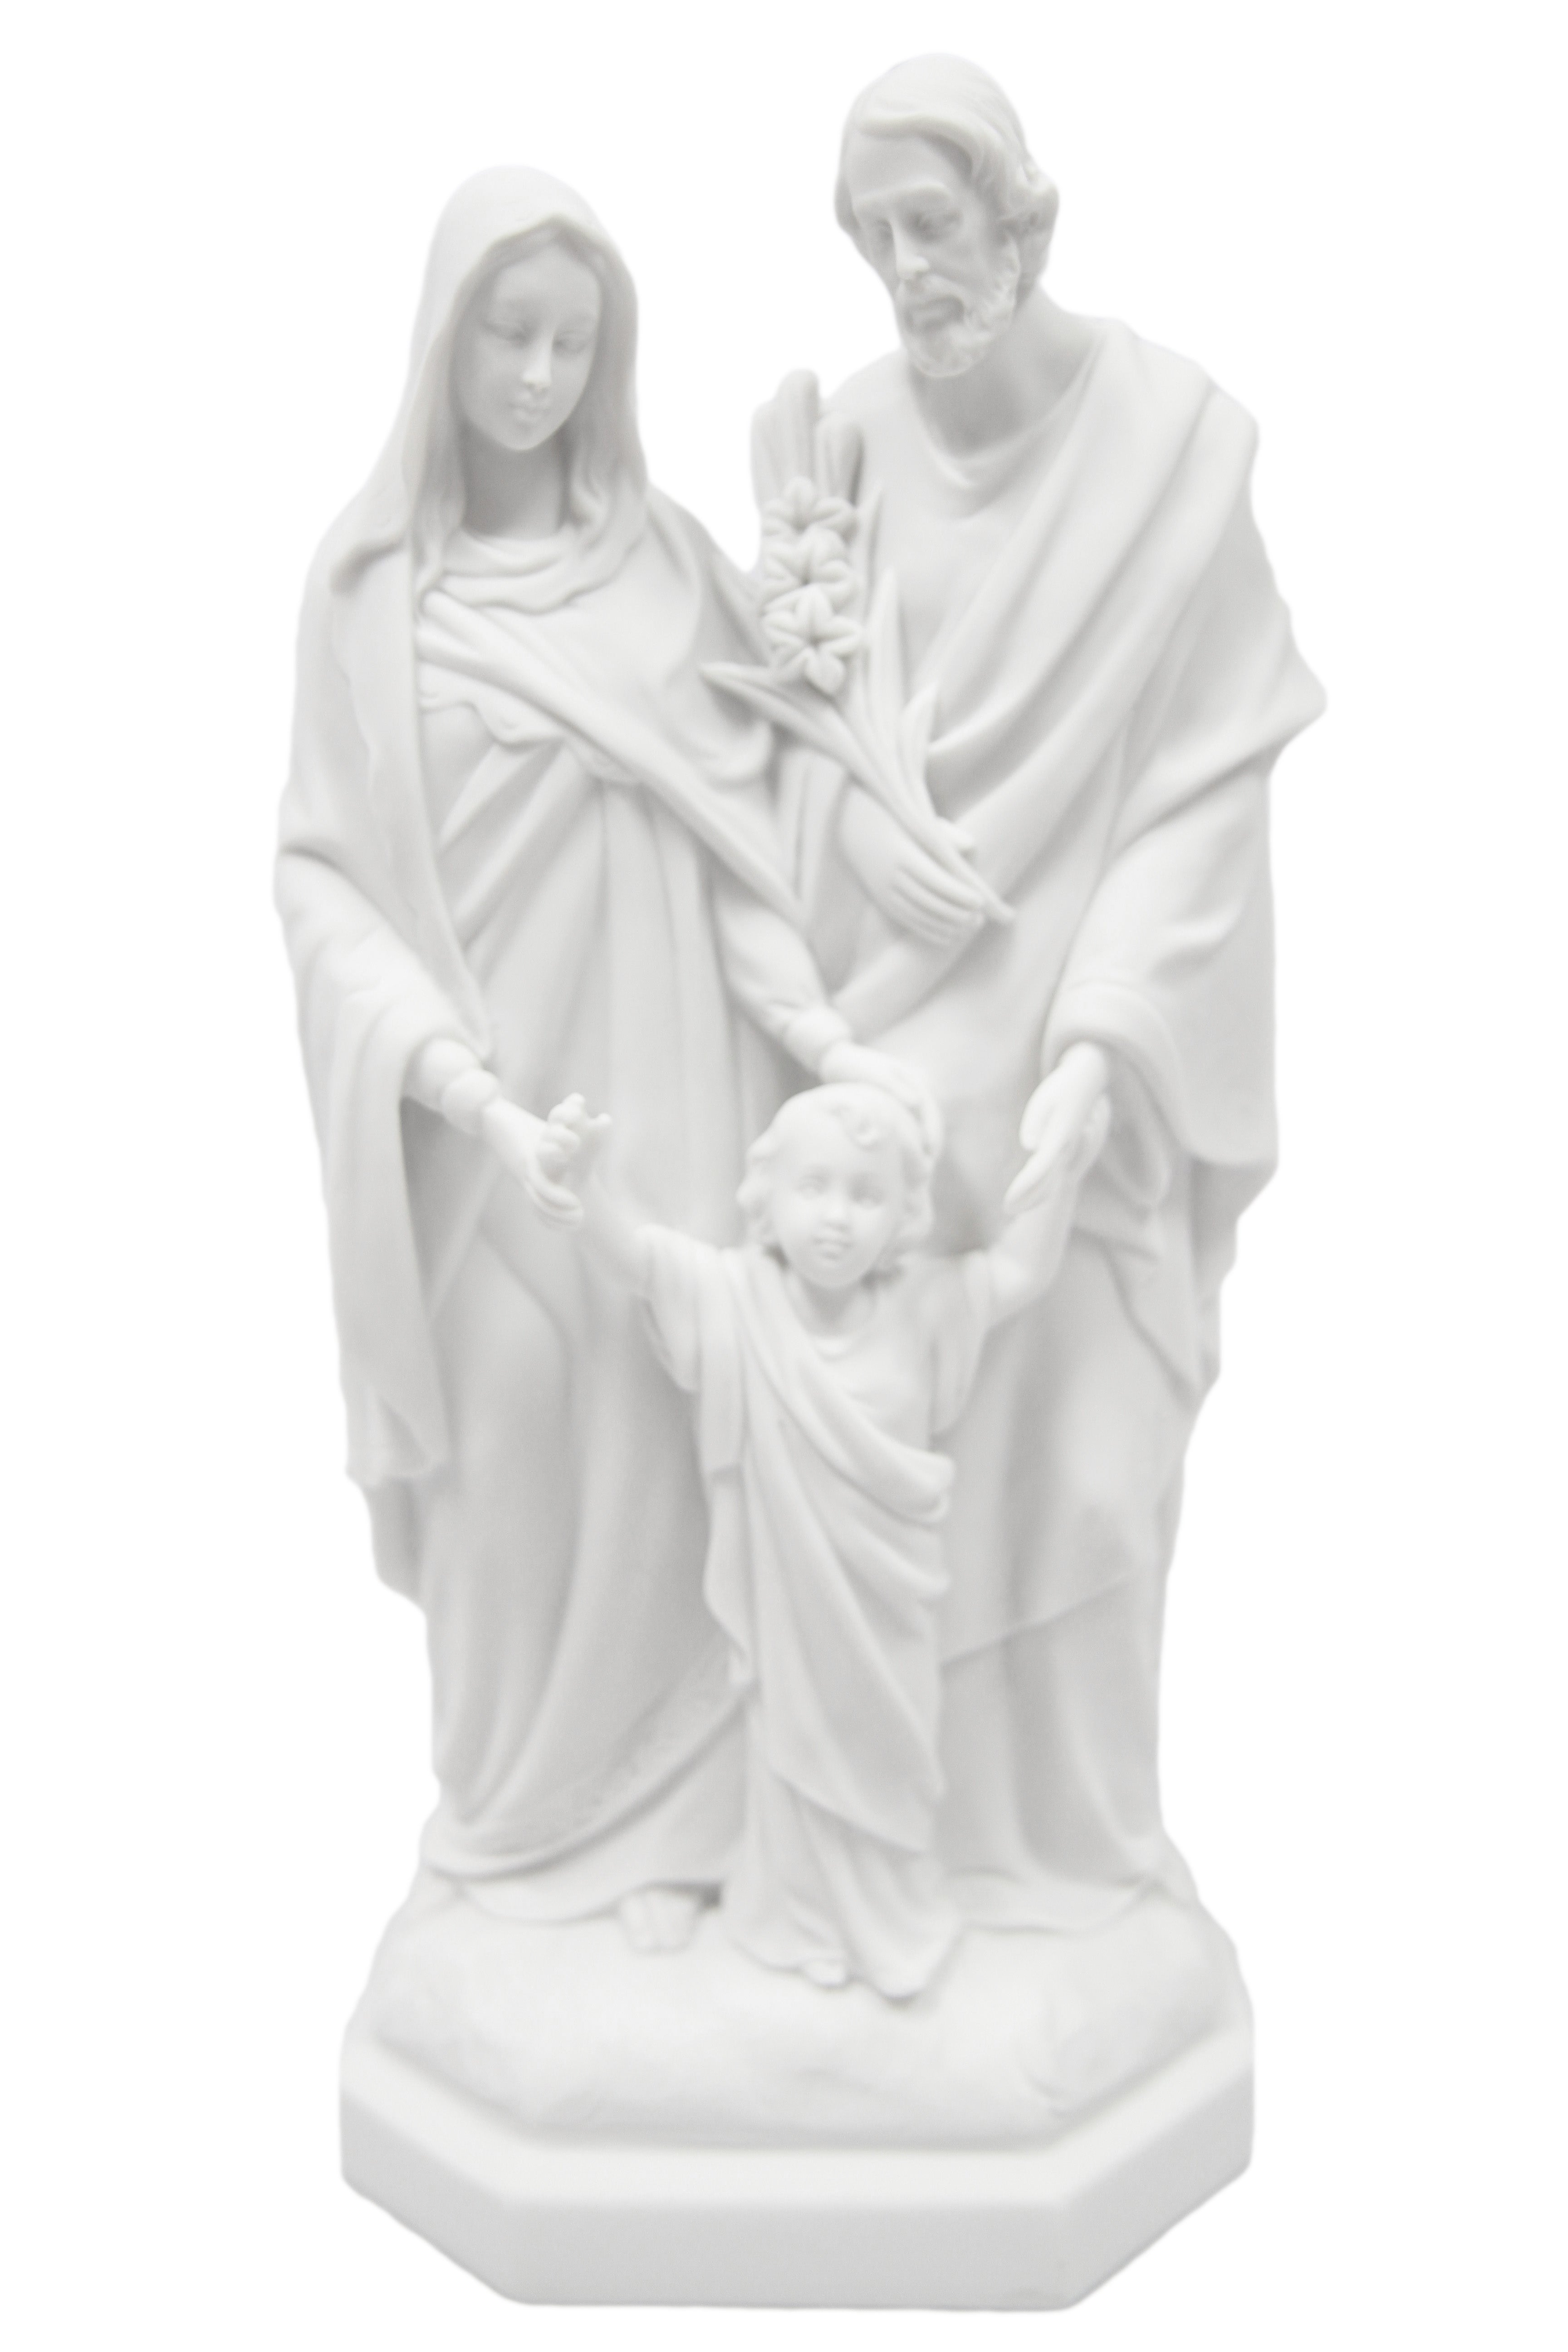 12 Inch Holy Family Statue Joseph Mary Jesus Catholic Religious Figurine